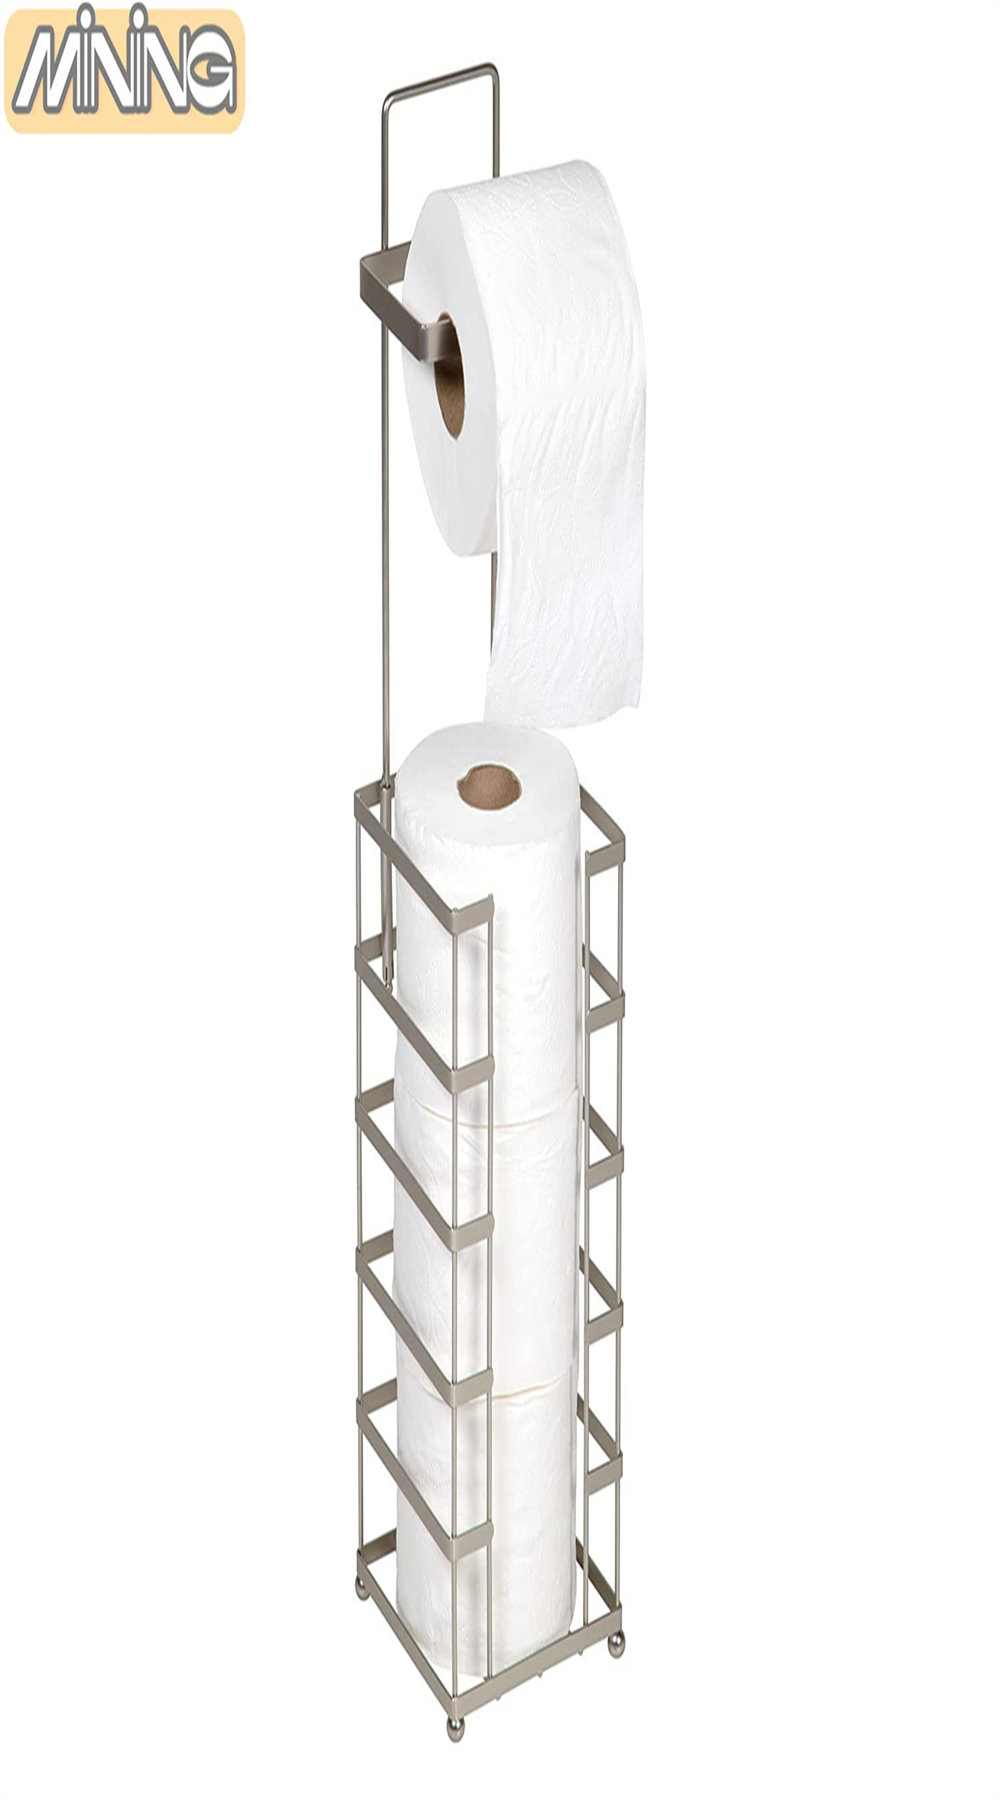 Vertical Free Standing Toilet Paper Holder 